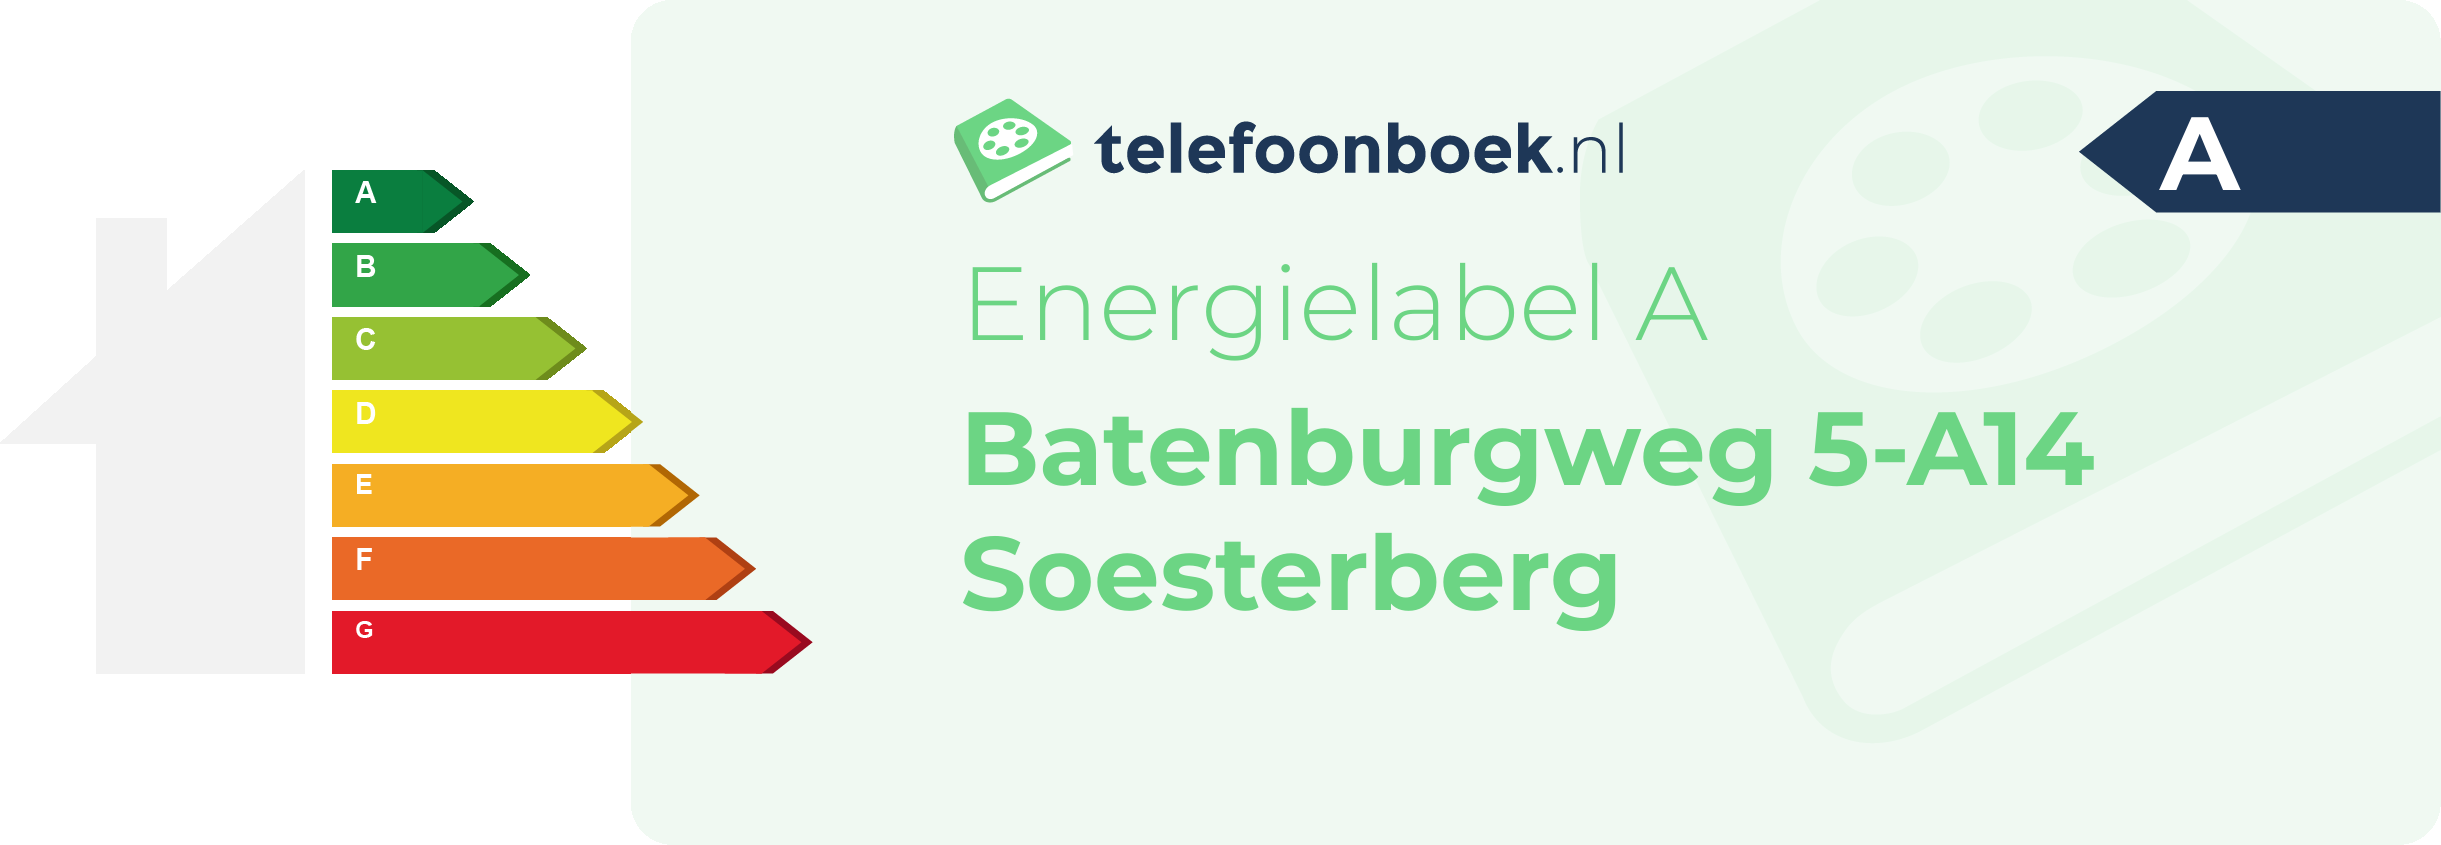 Energielabel Batenburgweg 5-A14 Soesterberg